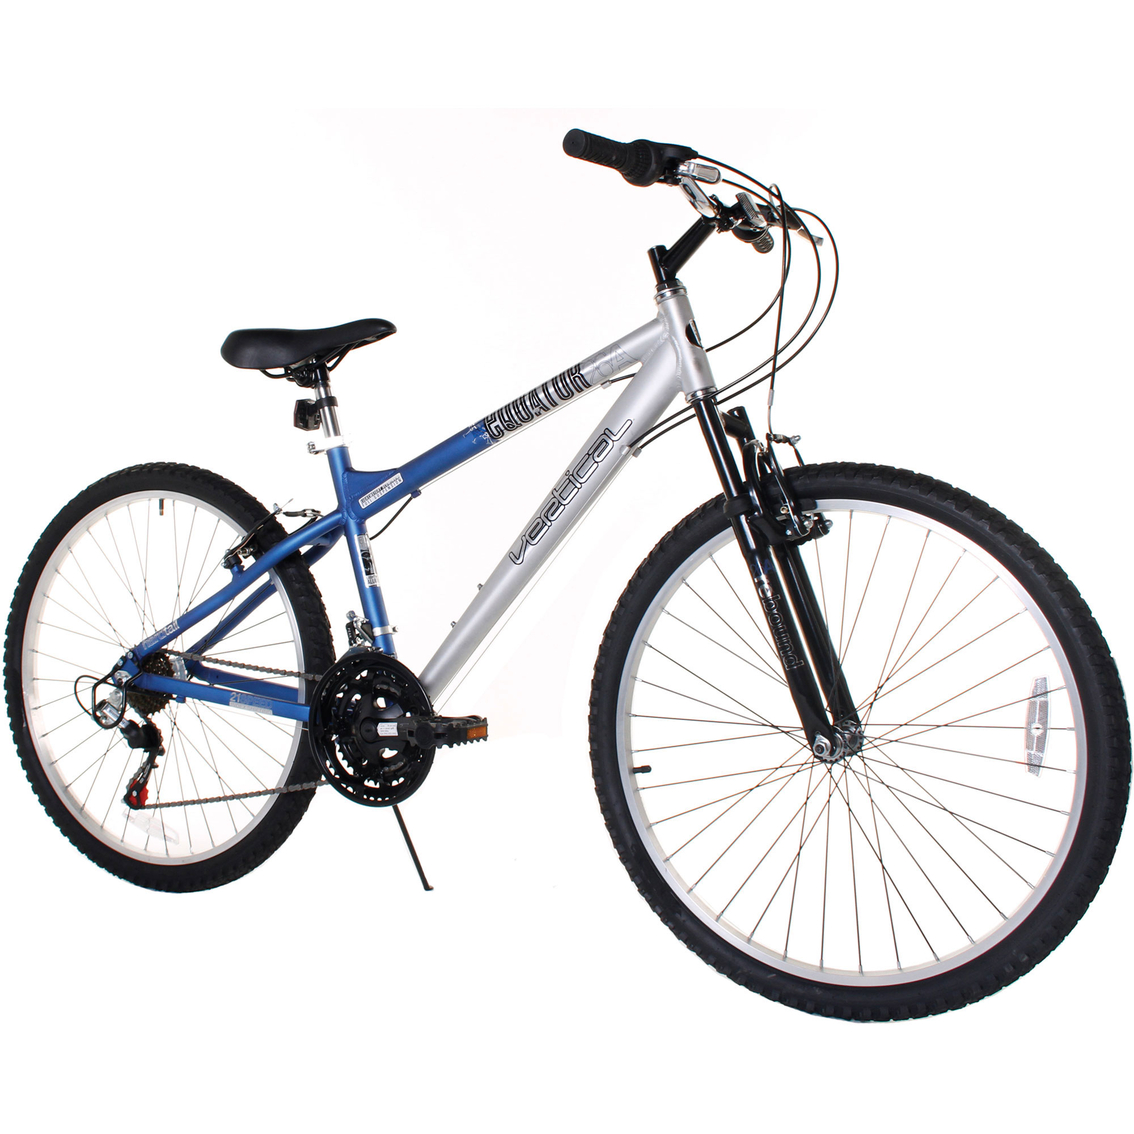 Equator Aluminum Bicycle | Adult Bikes 